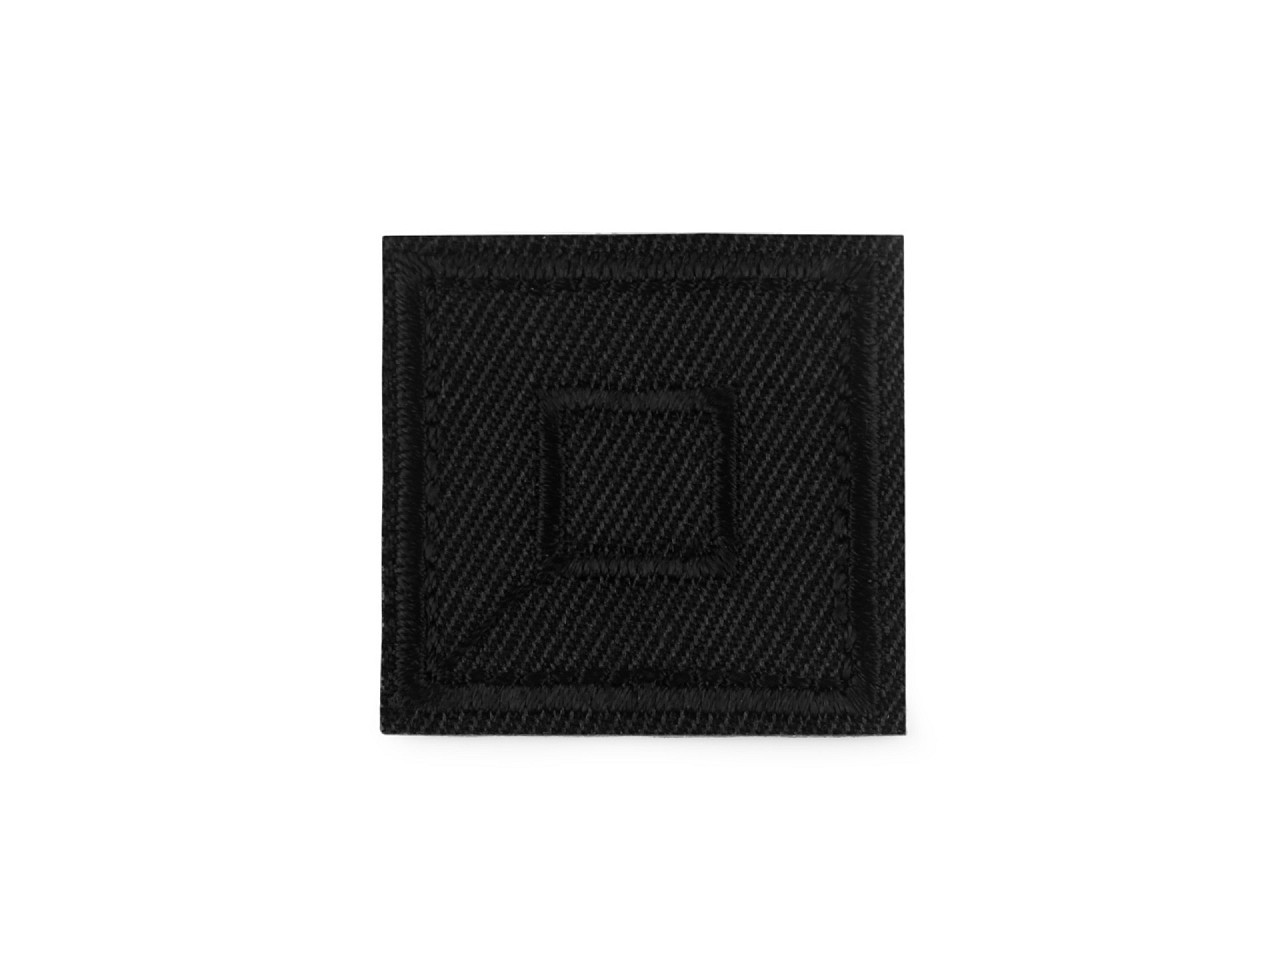 Nažehlovačka čtverec, barva 15 černá